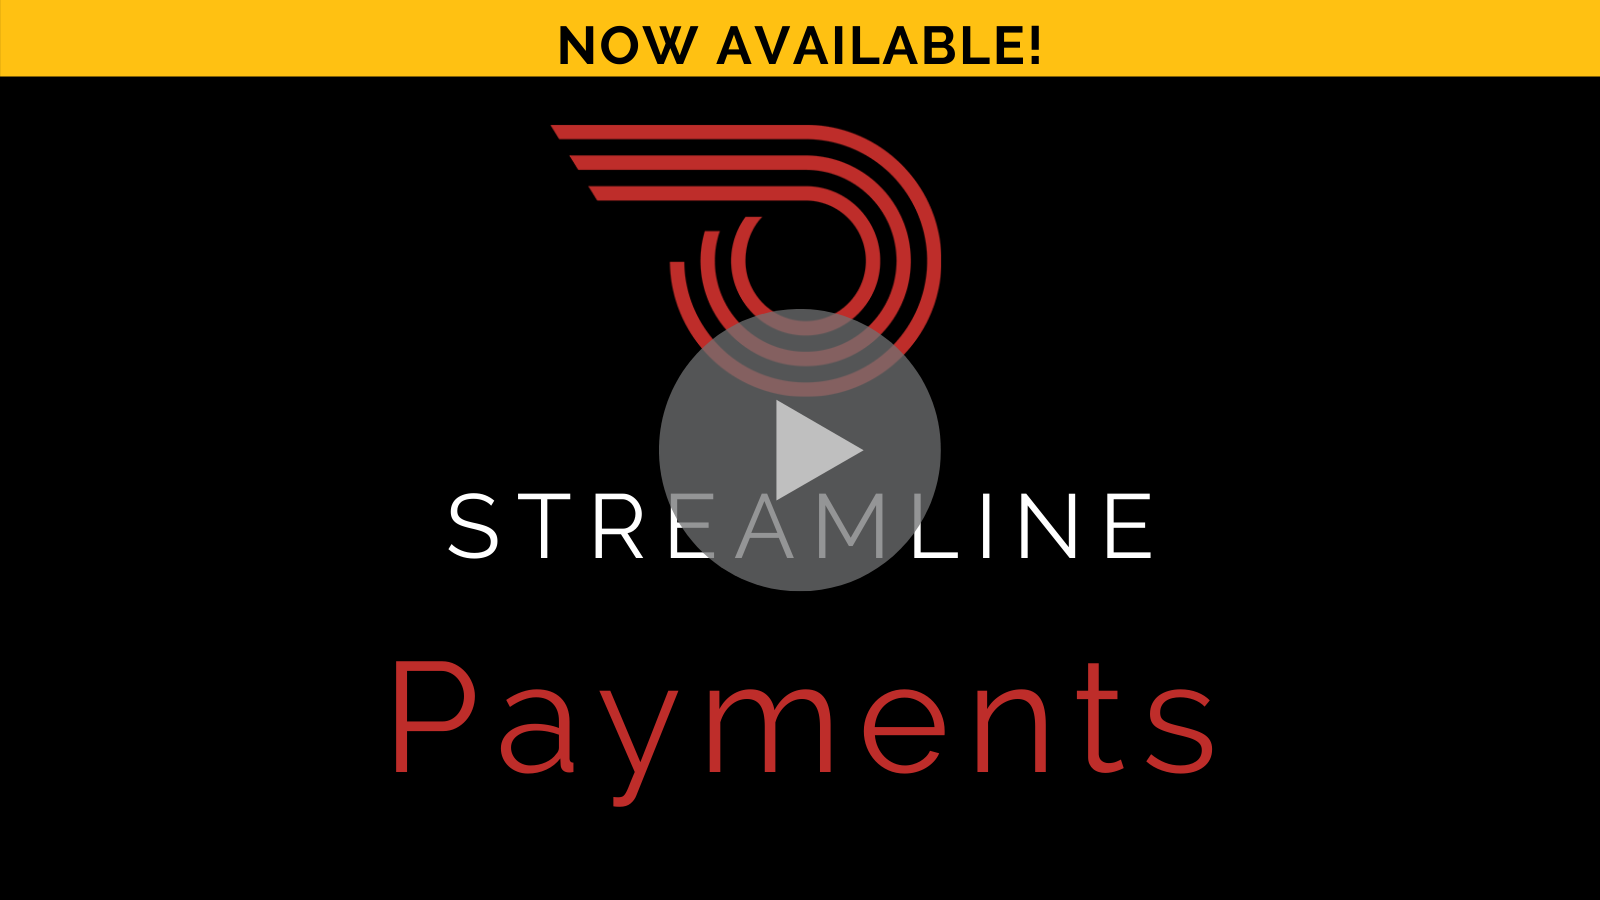 Streamline Payments Promo Demo 2 (3)